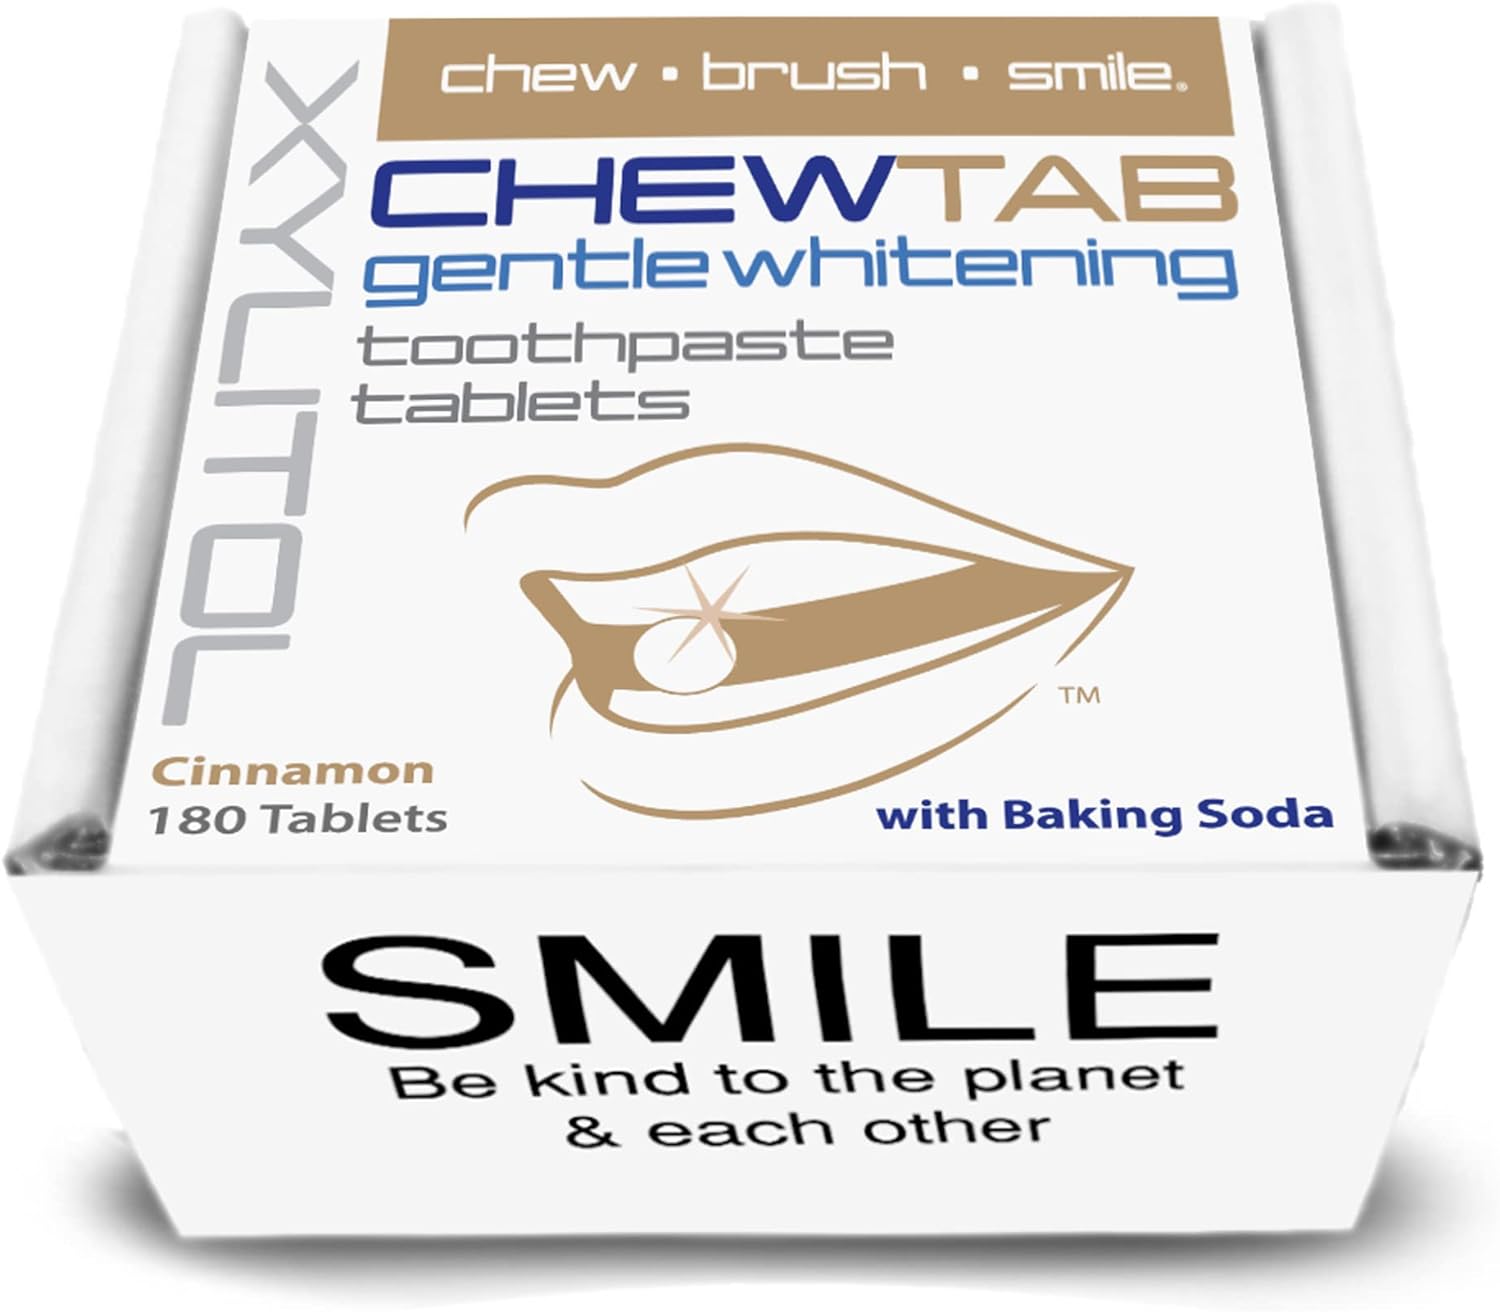 Weldental Chewtab Gentle Whitening Toothpaste Tablets Cinnamon Refill